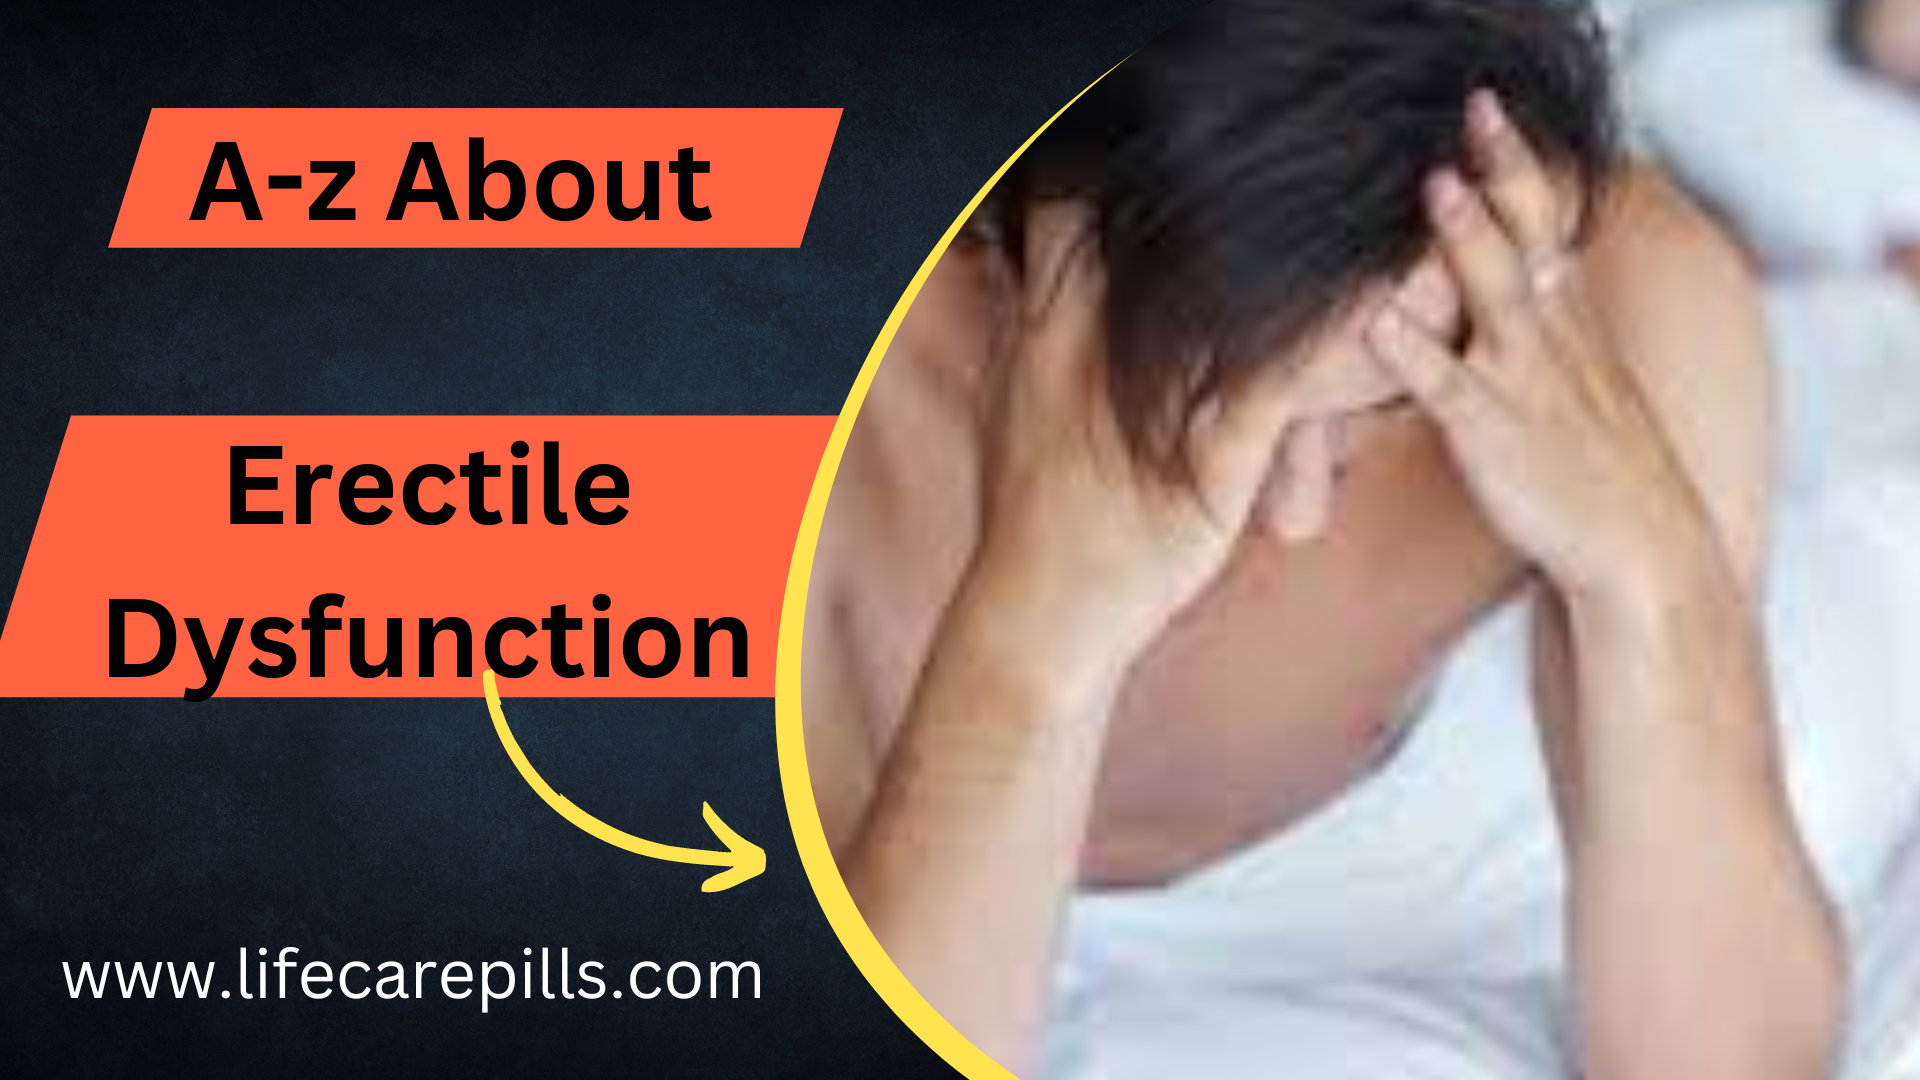 Erectile-Dysfunction-lifecarepills